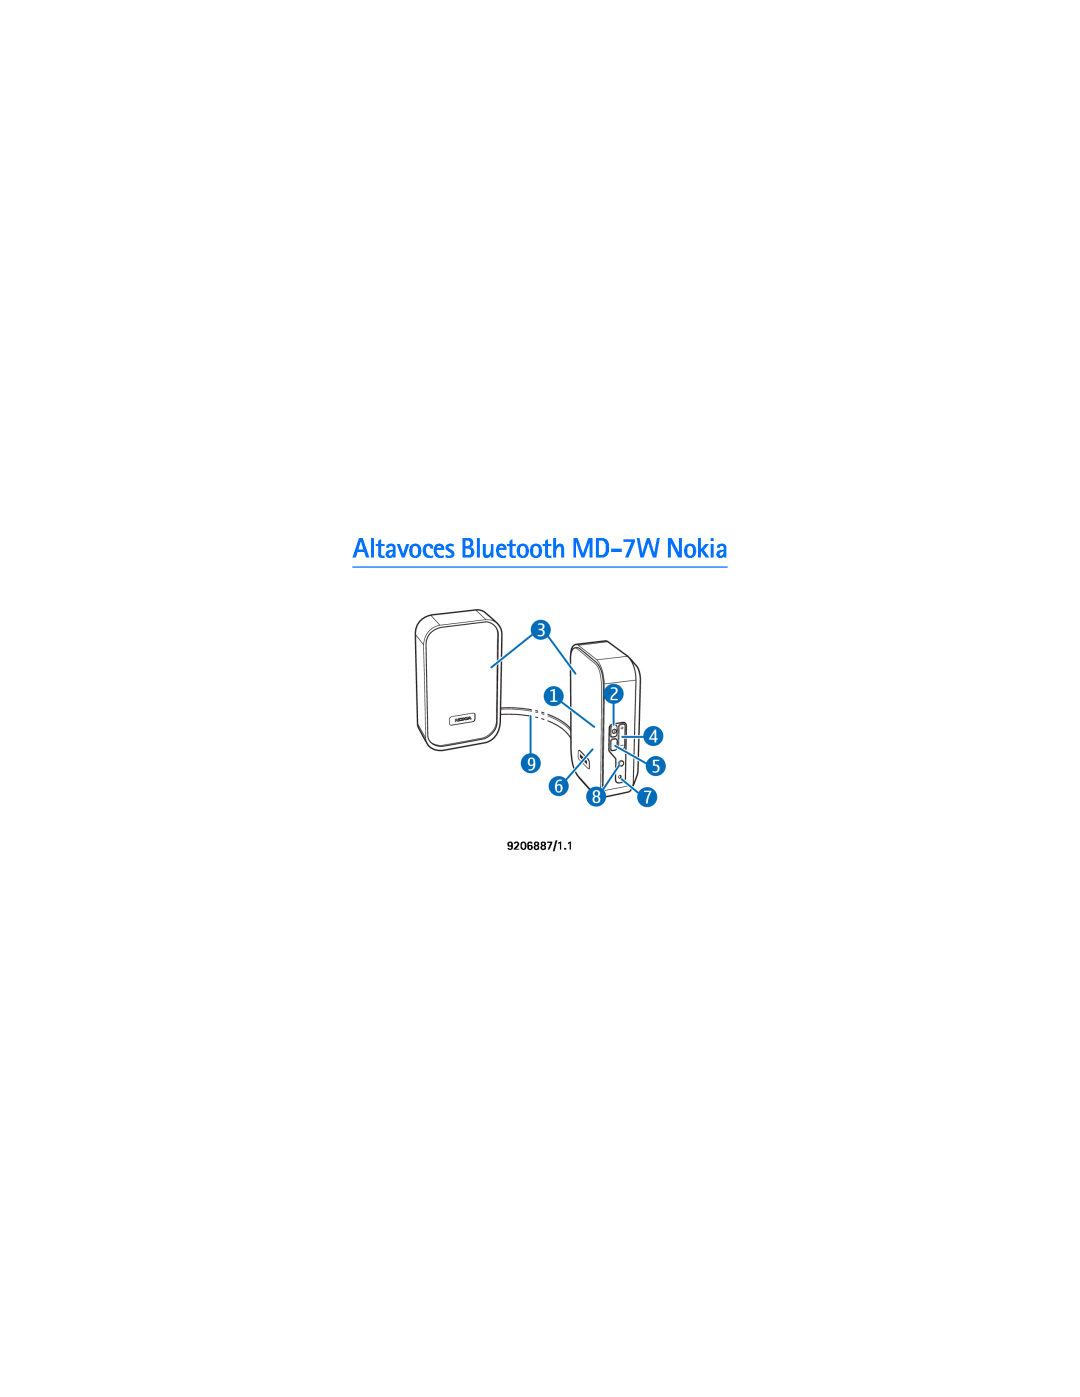 Nokia manual Altavoces Bluetooth MD-7WNokia, 4 95, 9206887/1.1 